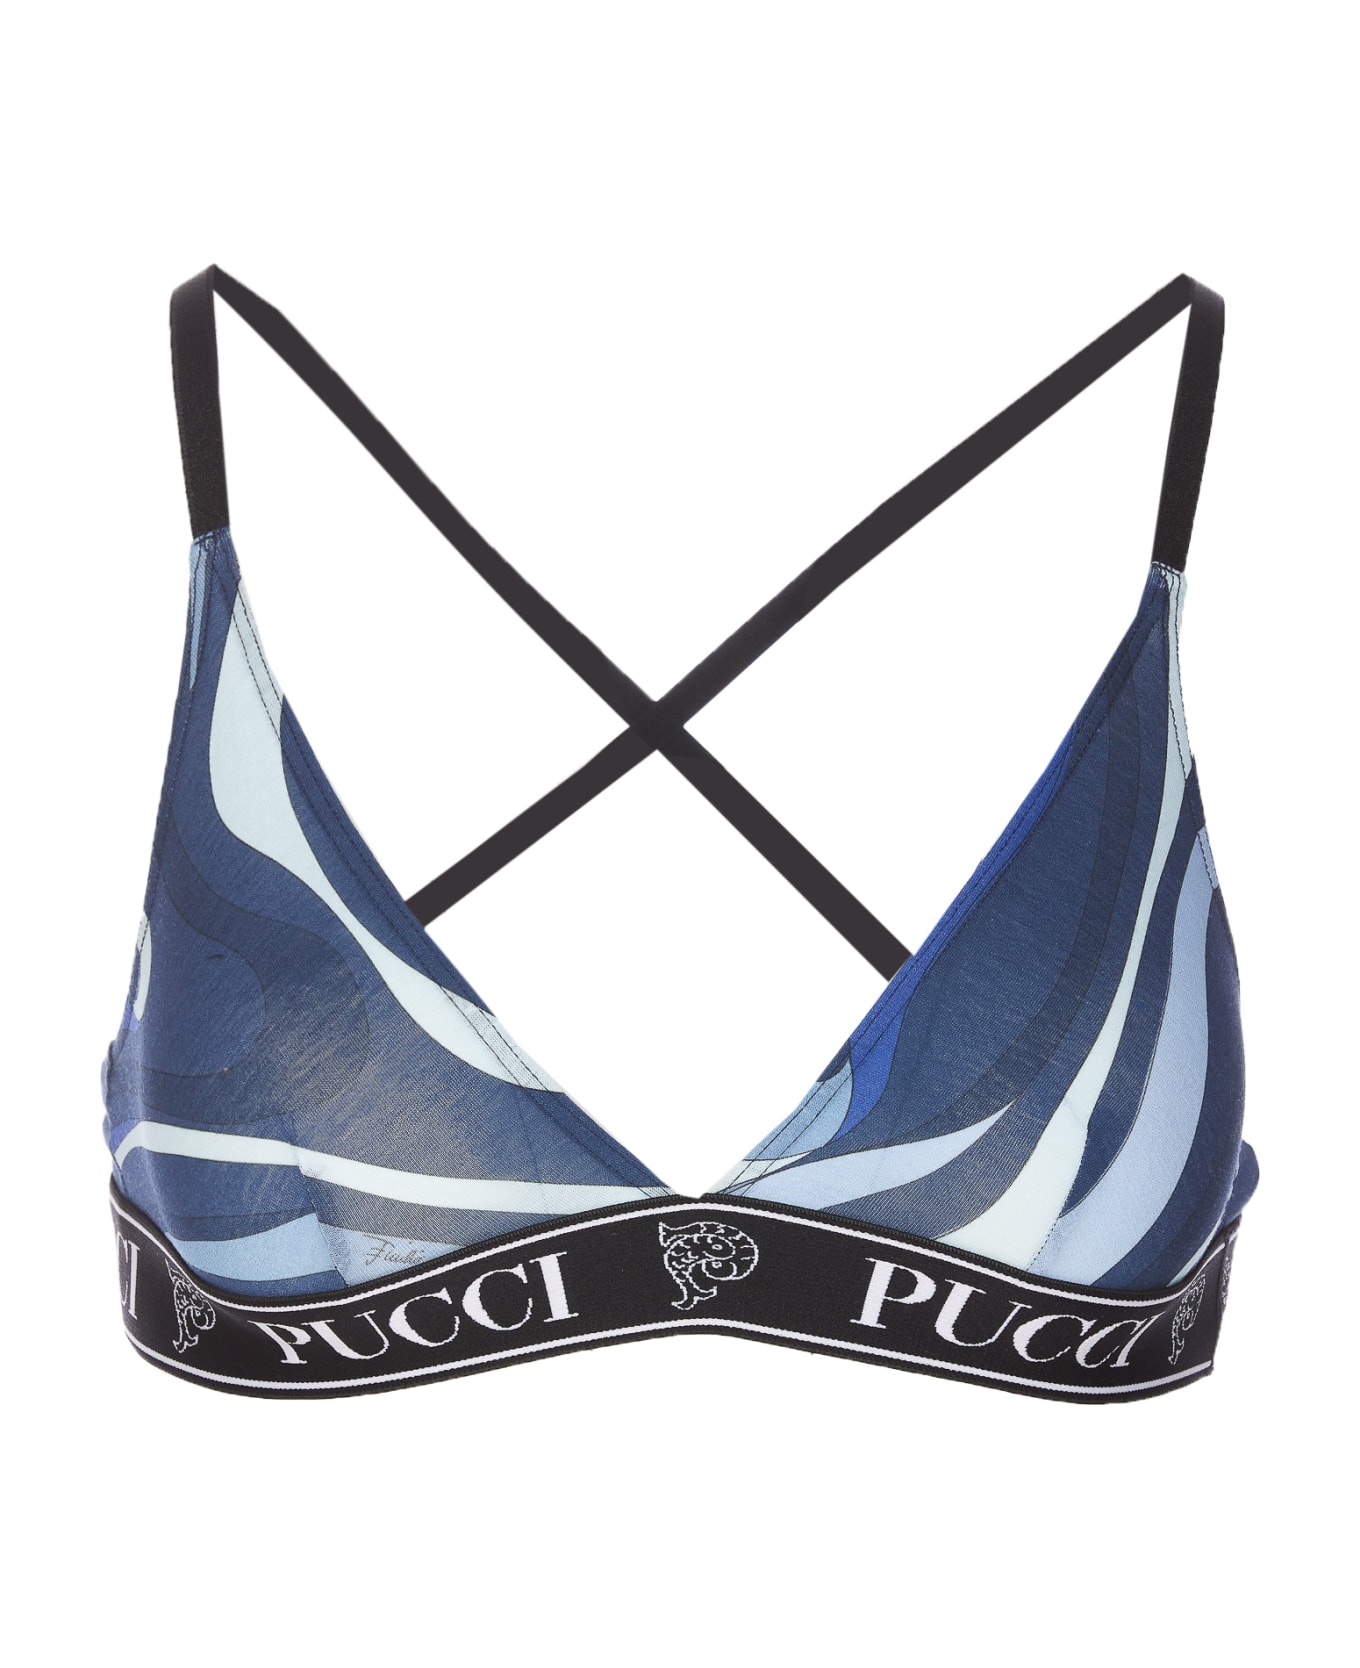 Pucci 3pack Bra - Blue ブラジャー